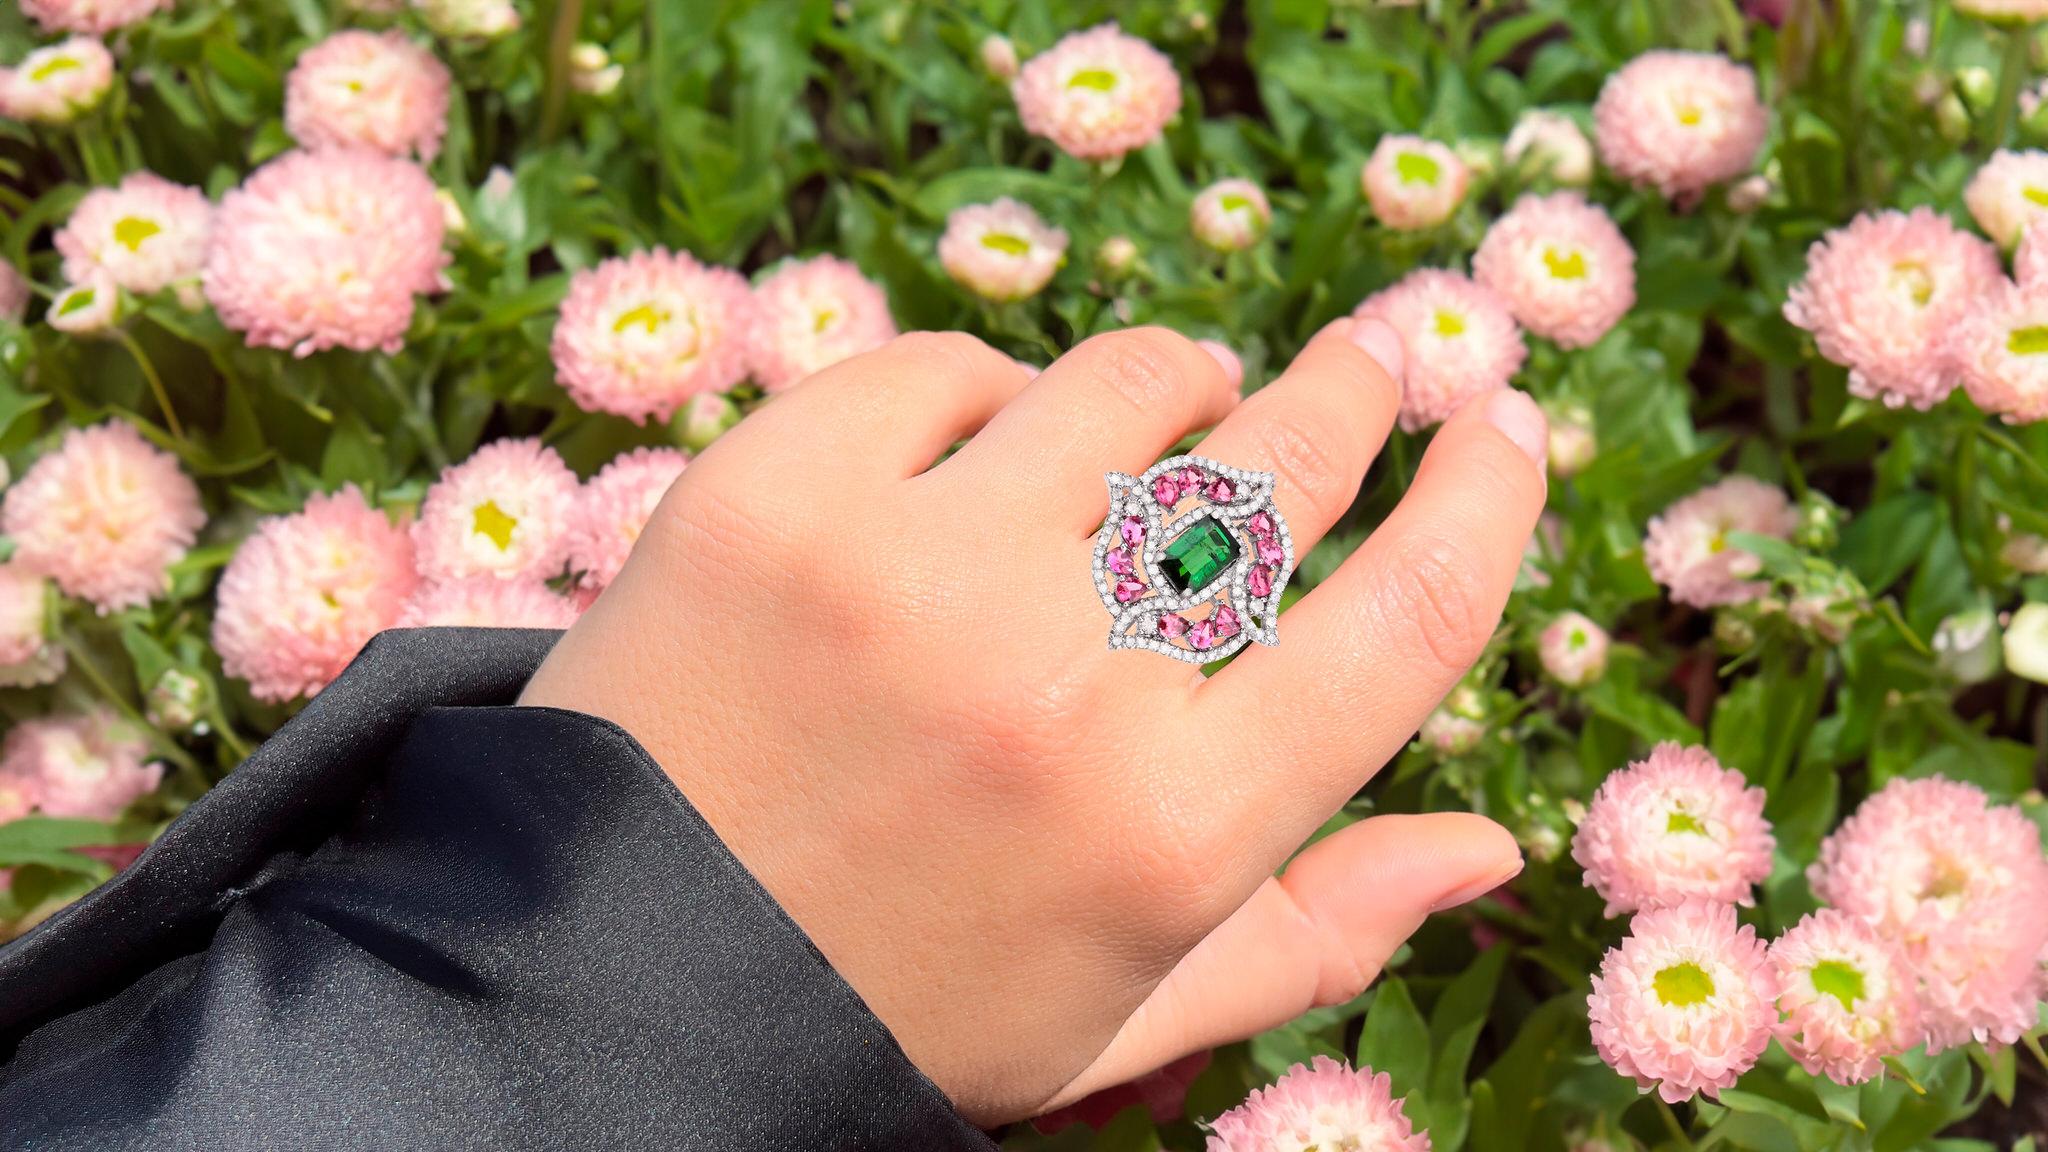 Emerald Cut Green Tourmaline Ring With Pink Tourmalines and Diamonds 5.07 Carats